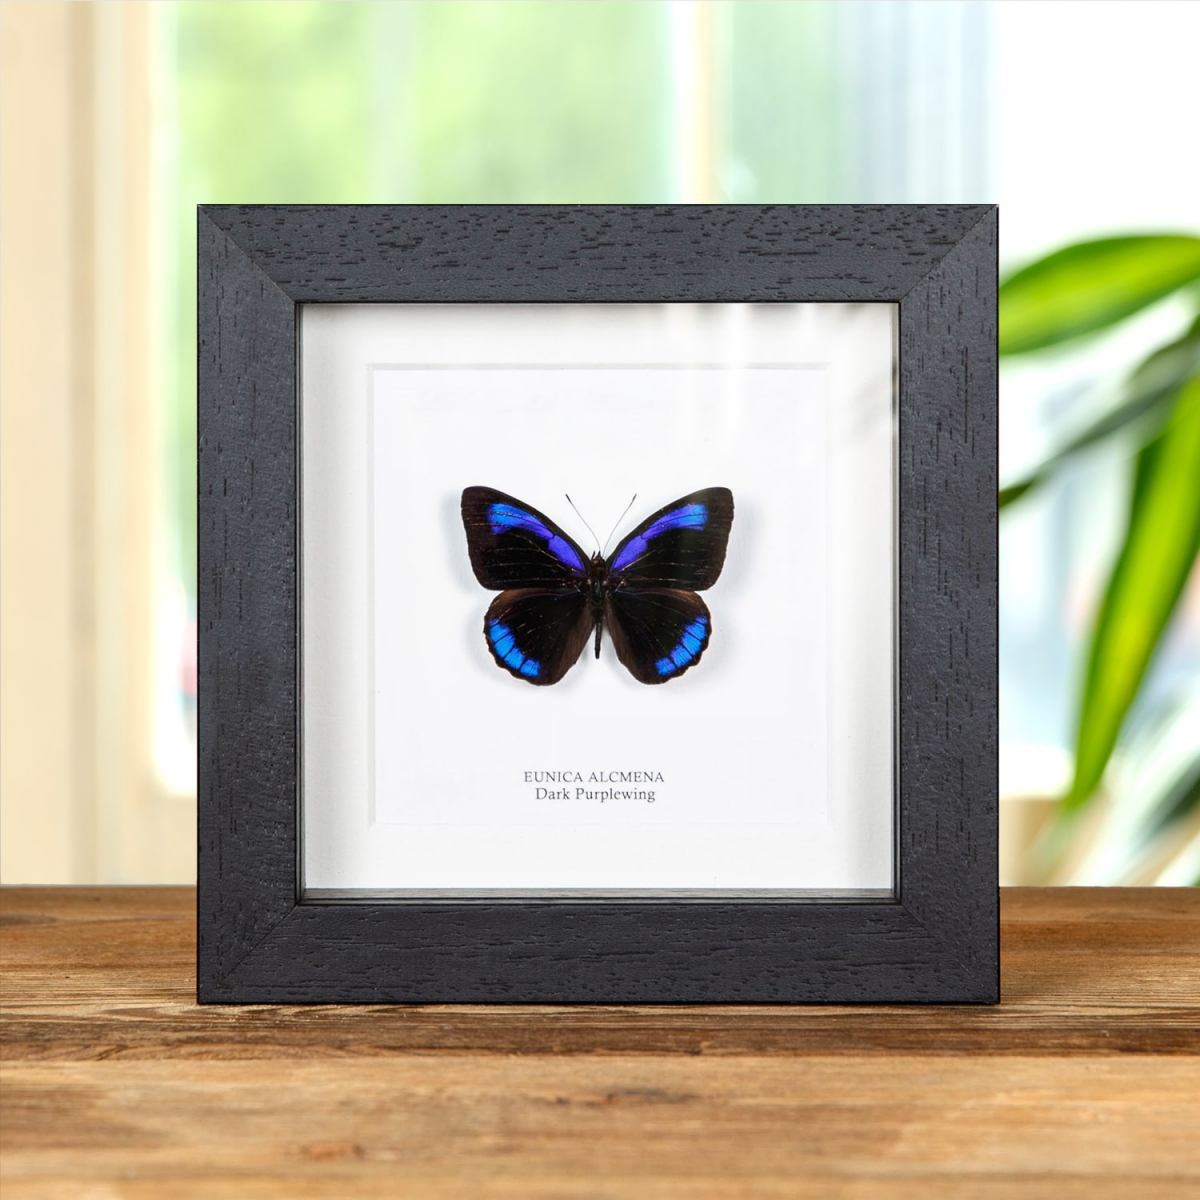 Minibeast Dark Purplewing in Box Frame (Eunica alcmena)